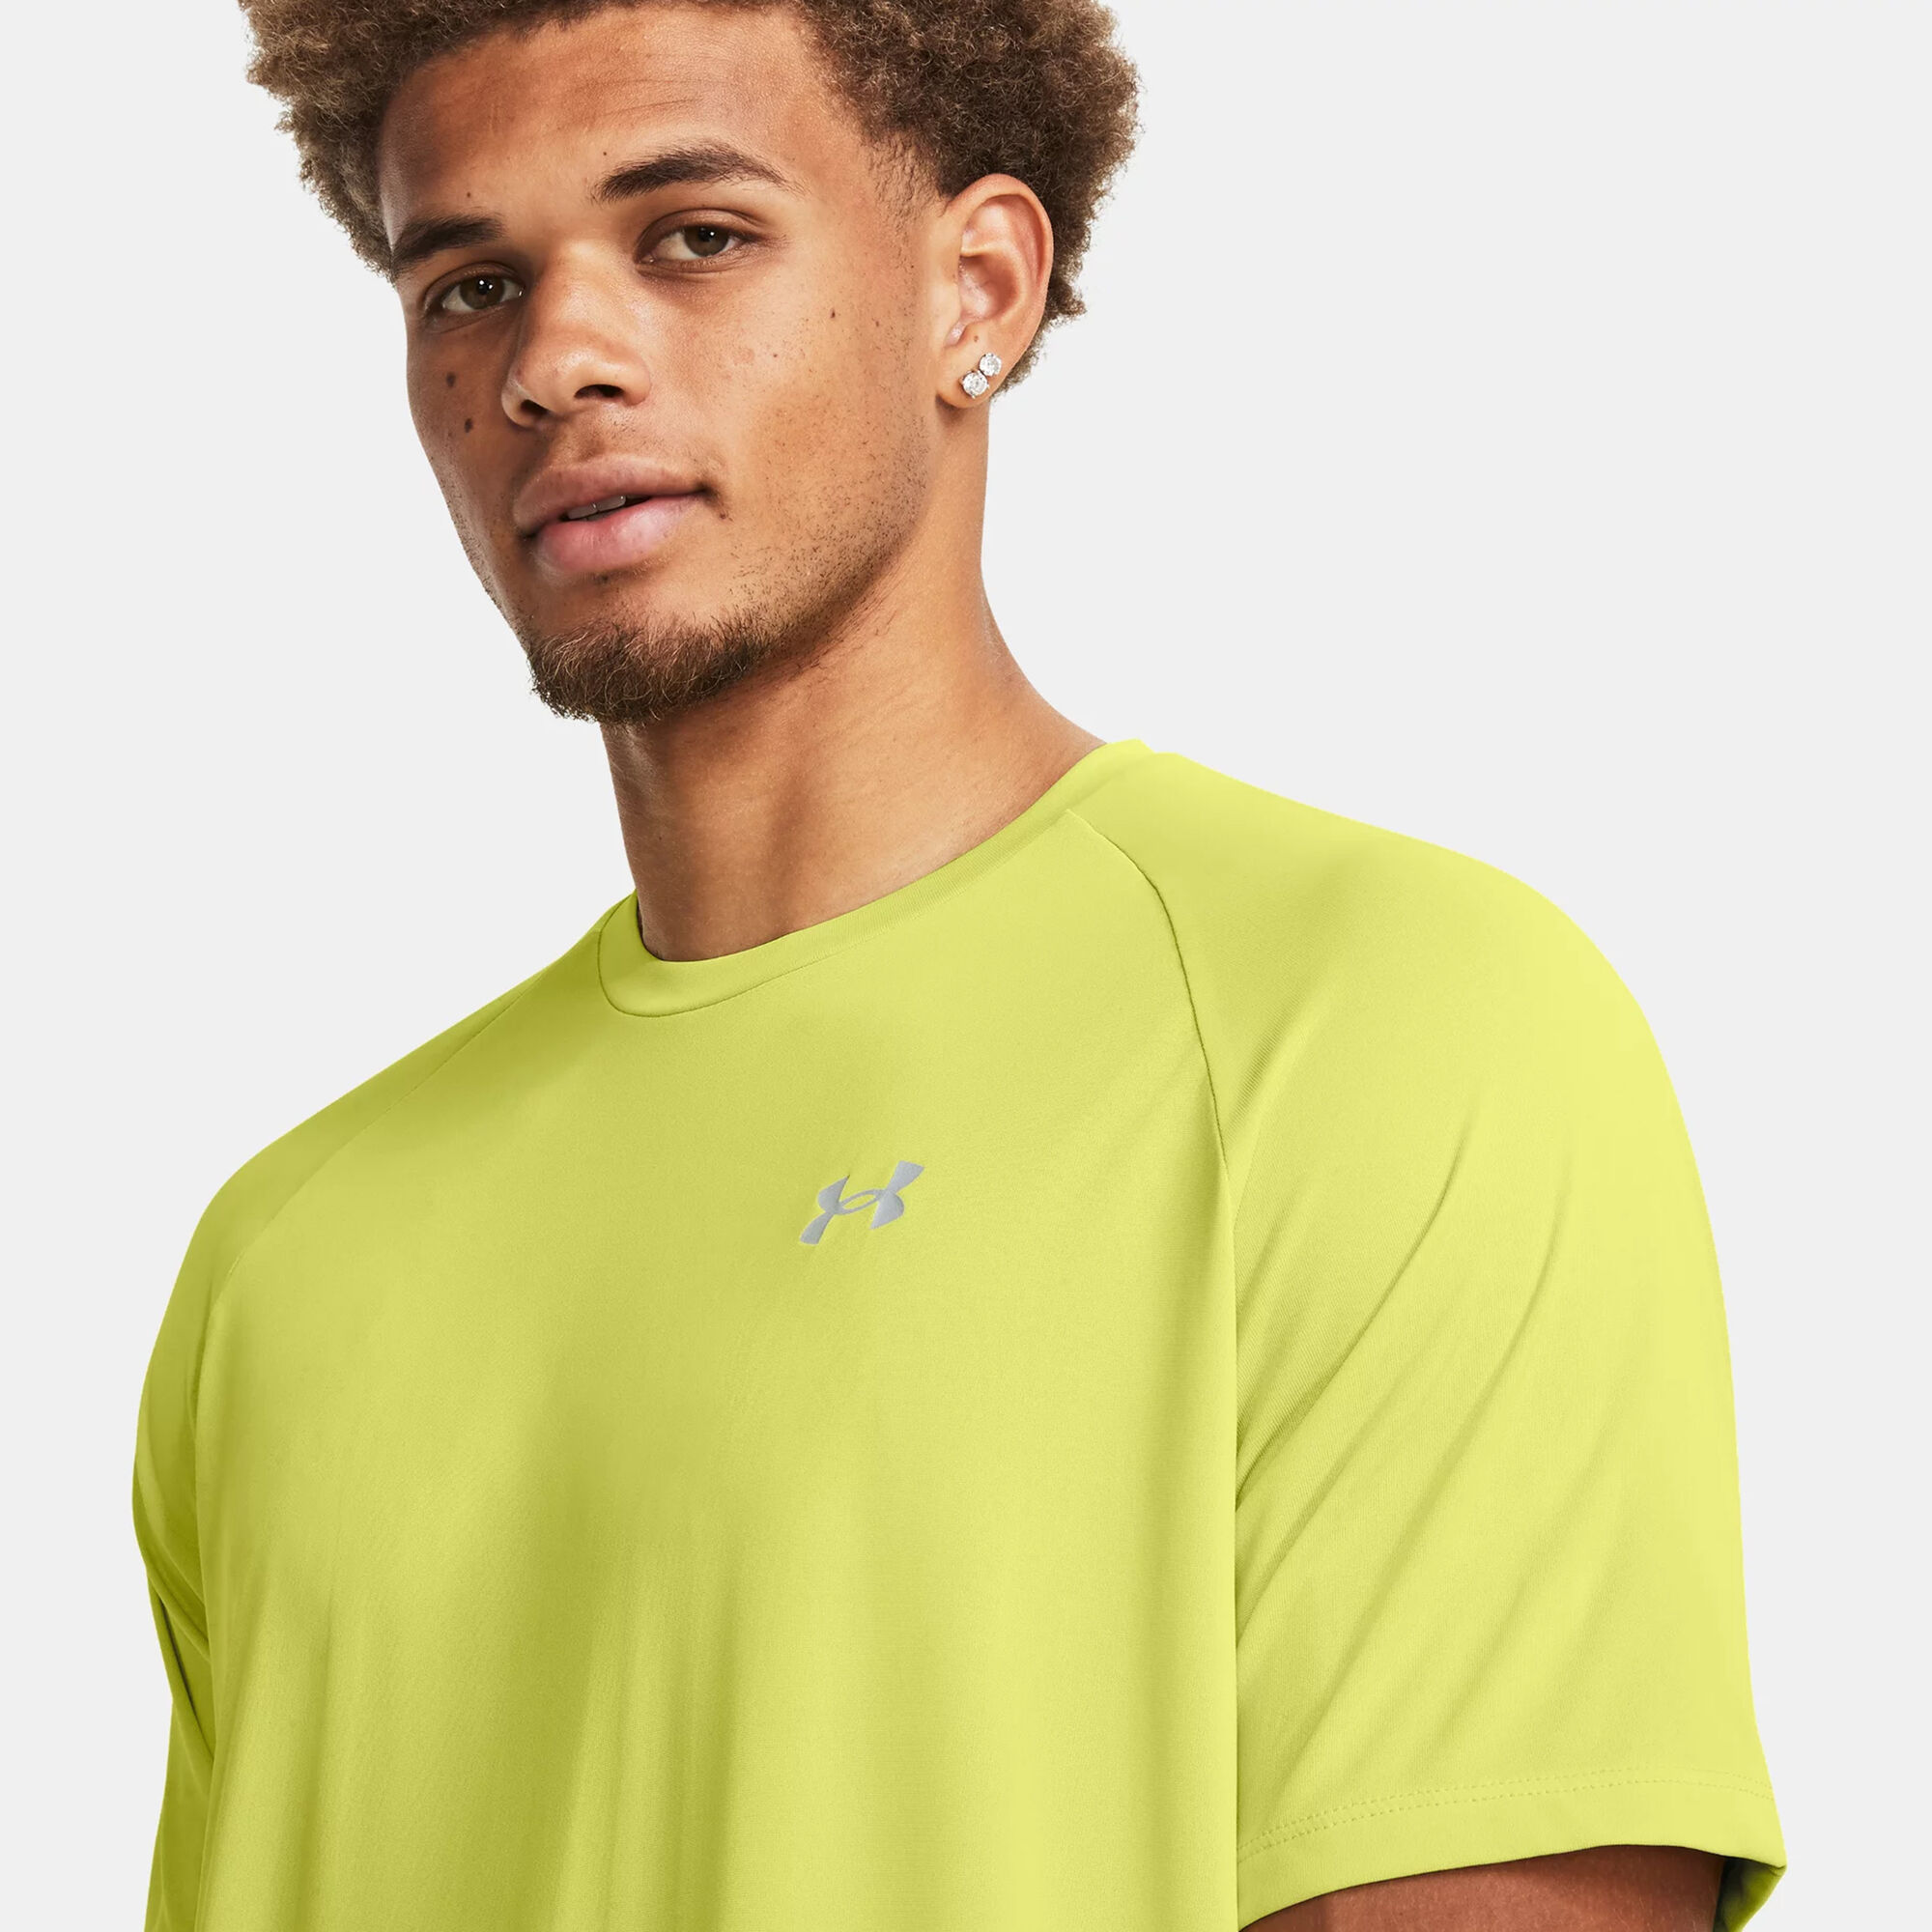 Buy Under Armour Tech Reflective T-Shirt Men Lime online | Tennis Point COM